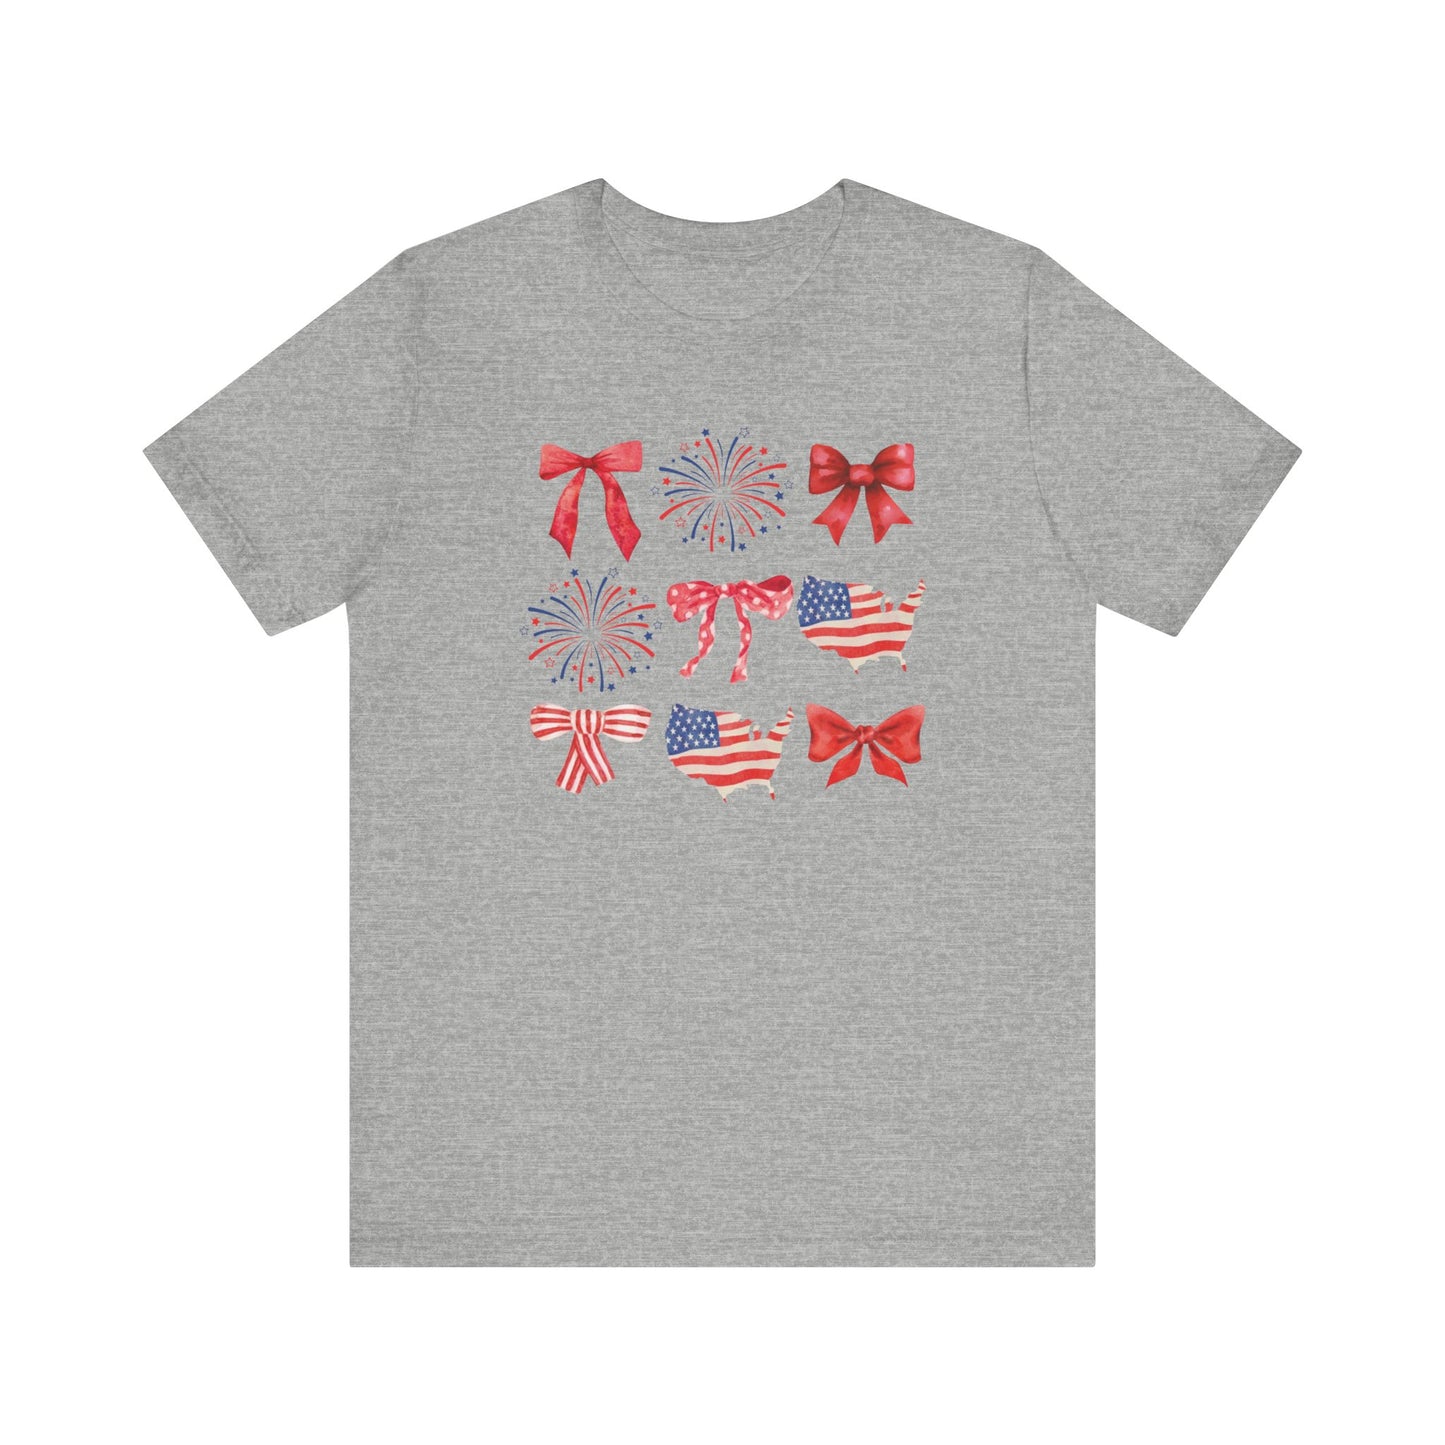 "Stars, Stripes, & Bows" 4th of JulyTeacher T-shirt